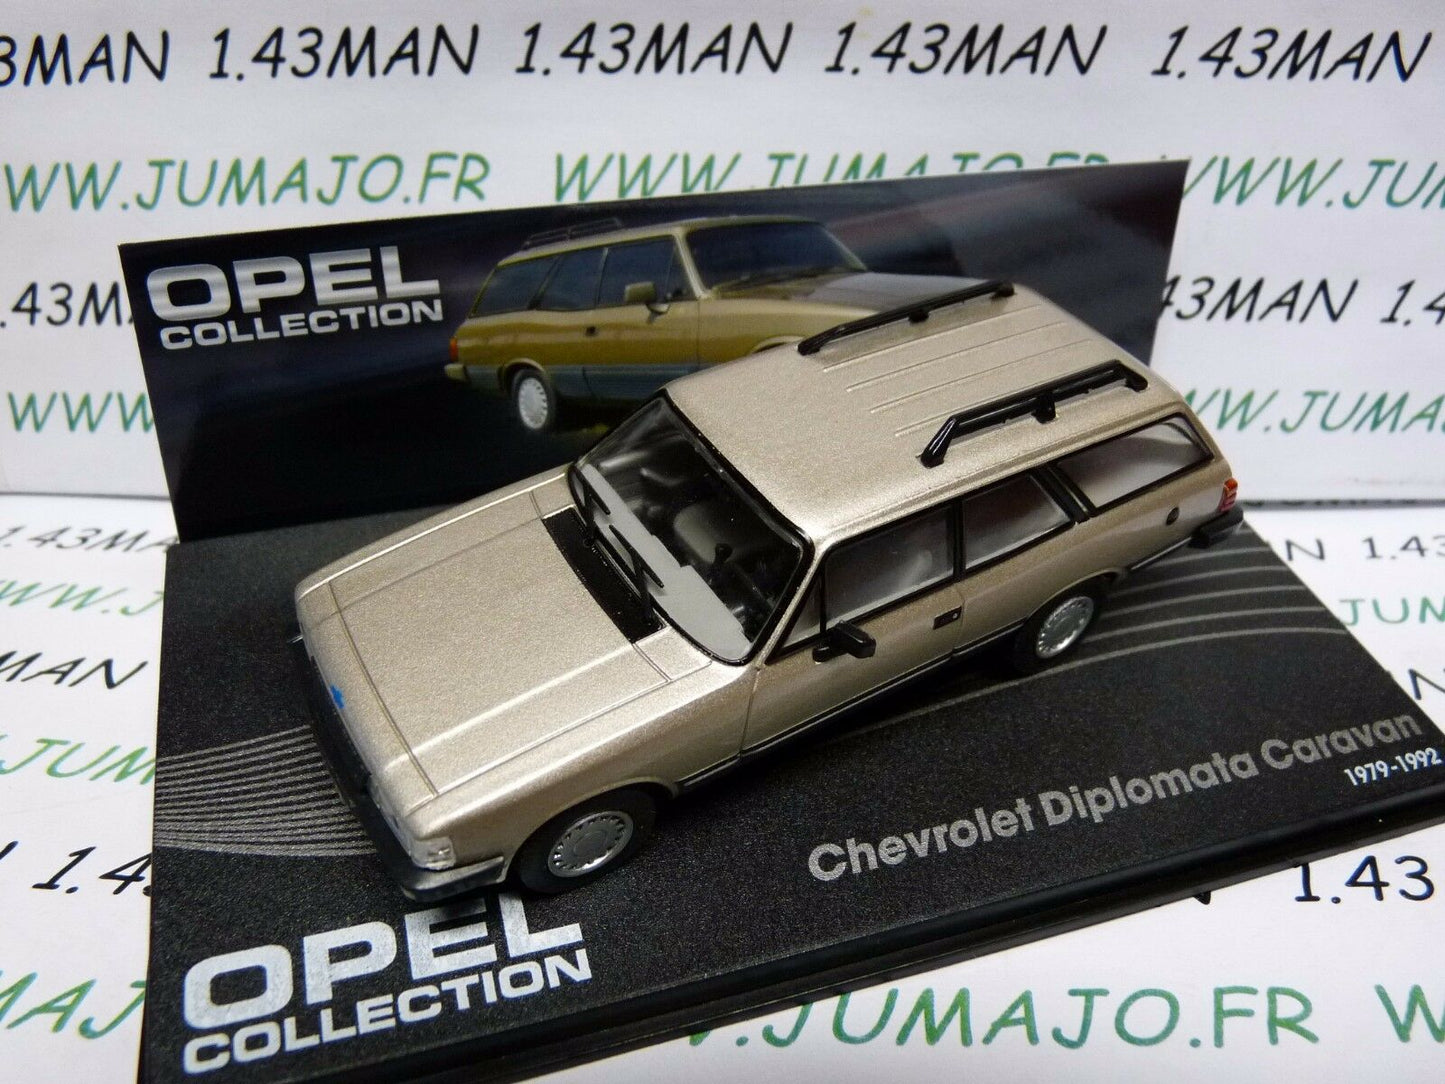 OPE71 voiture 1/43 IXO OPEL collection : CHEVROLET Diplomata Caravan break